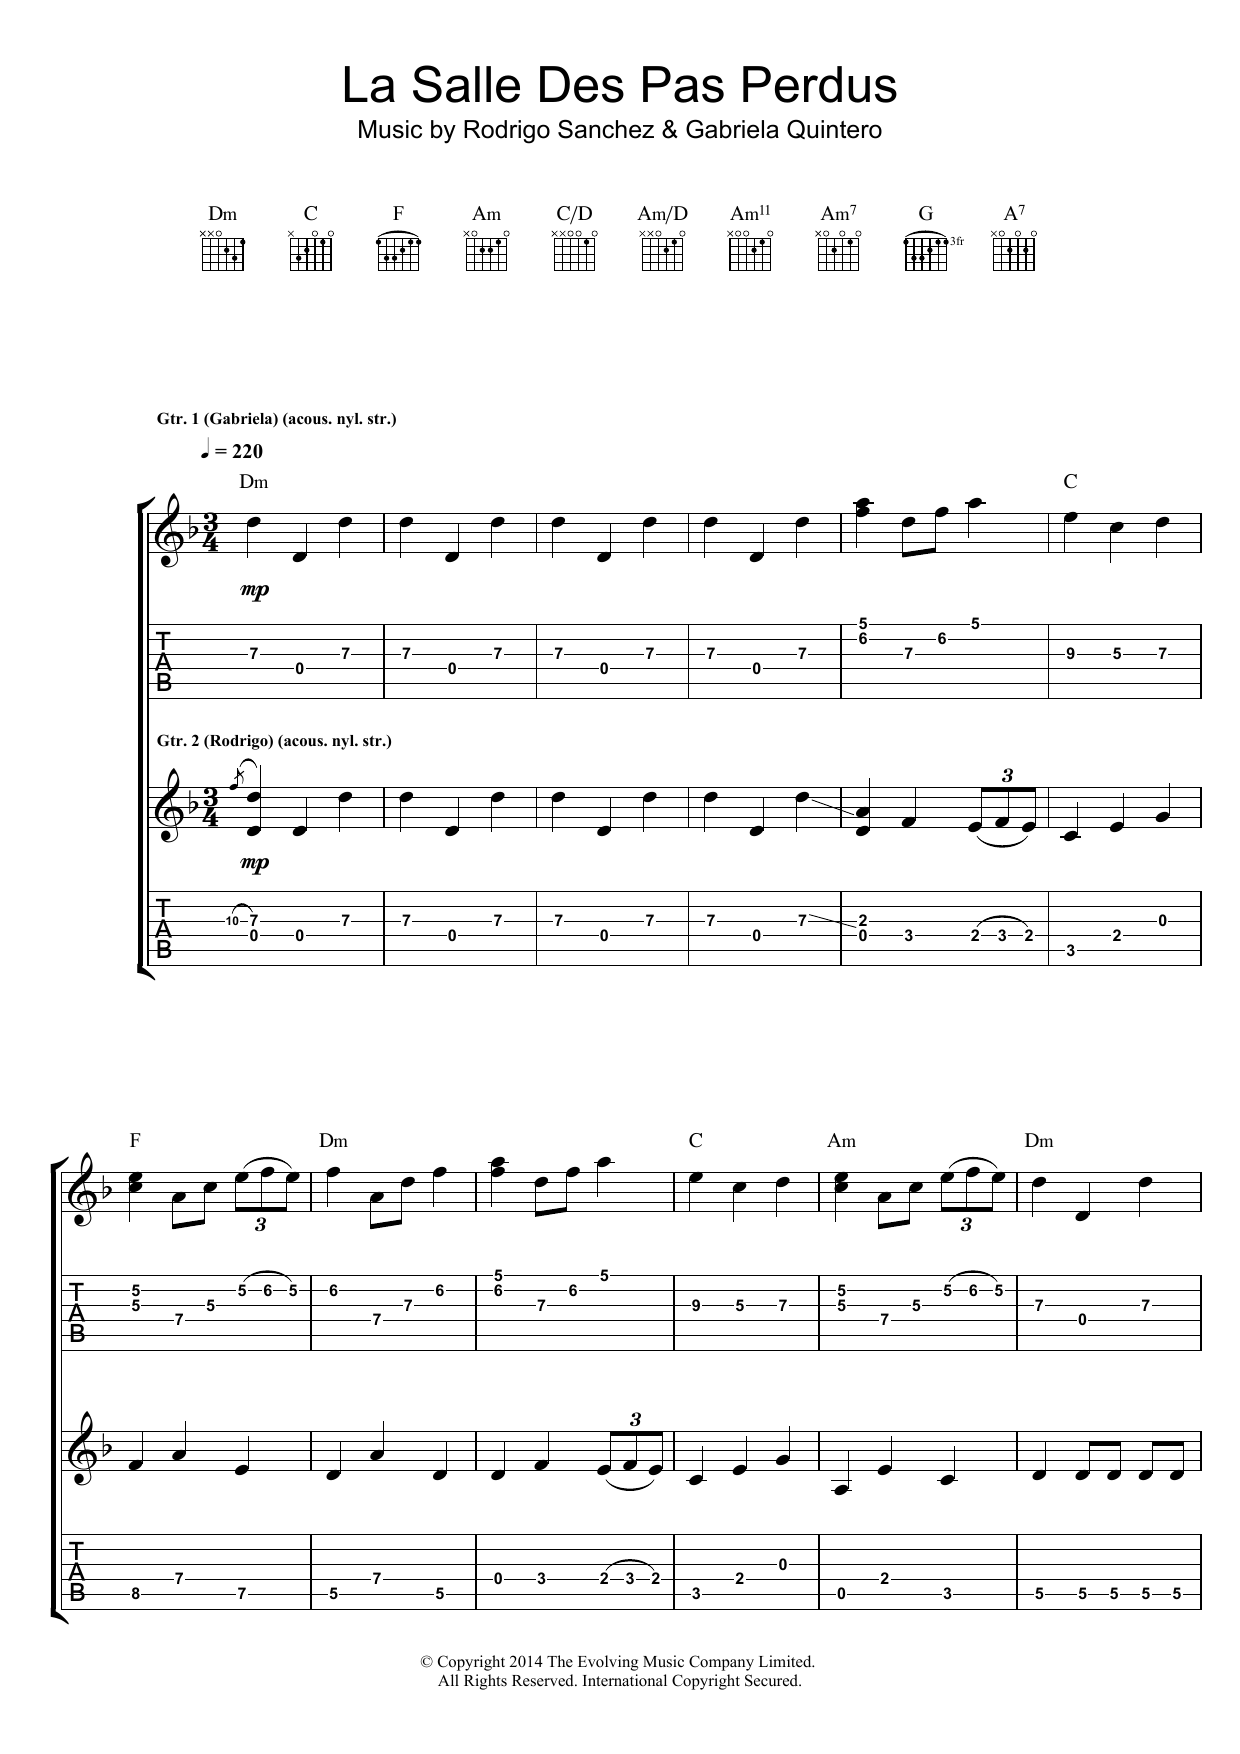 Rodrigo y Gabriela La Salle Des Pas Perdus Sheet Music Notes & Chords for Guitar Tab - Download or Print PDF